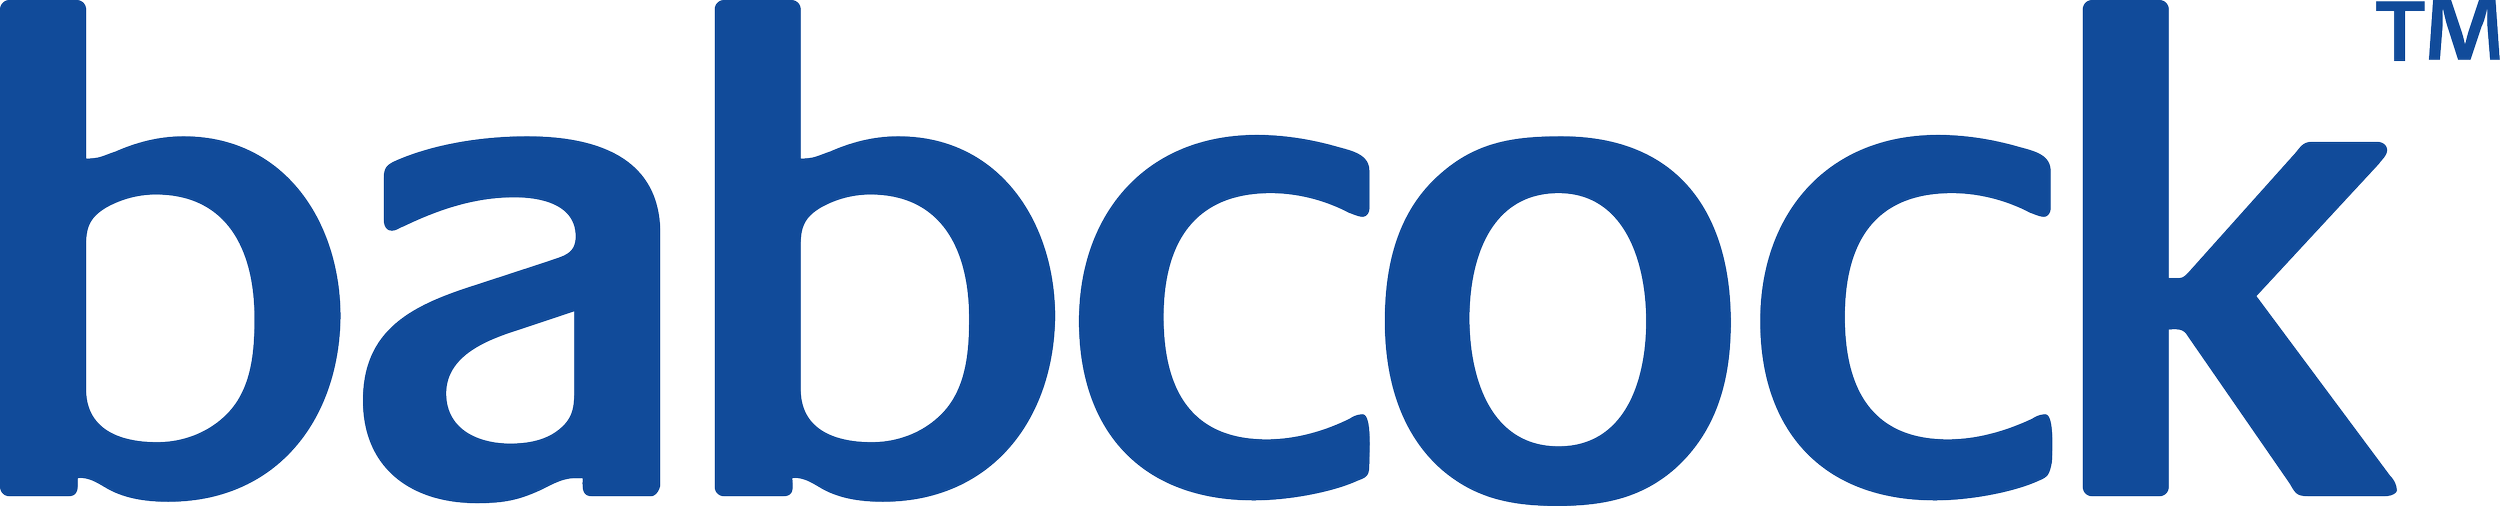 babcock logo large.png